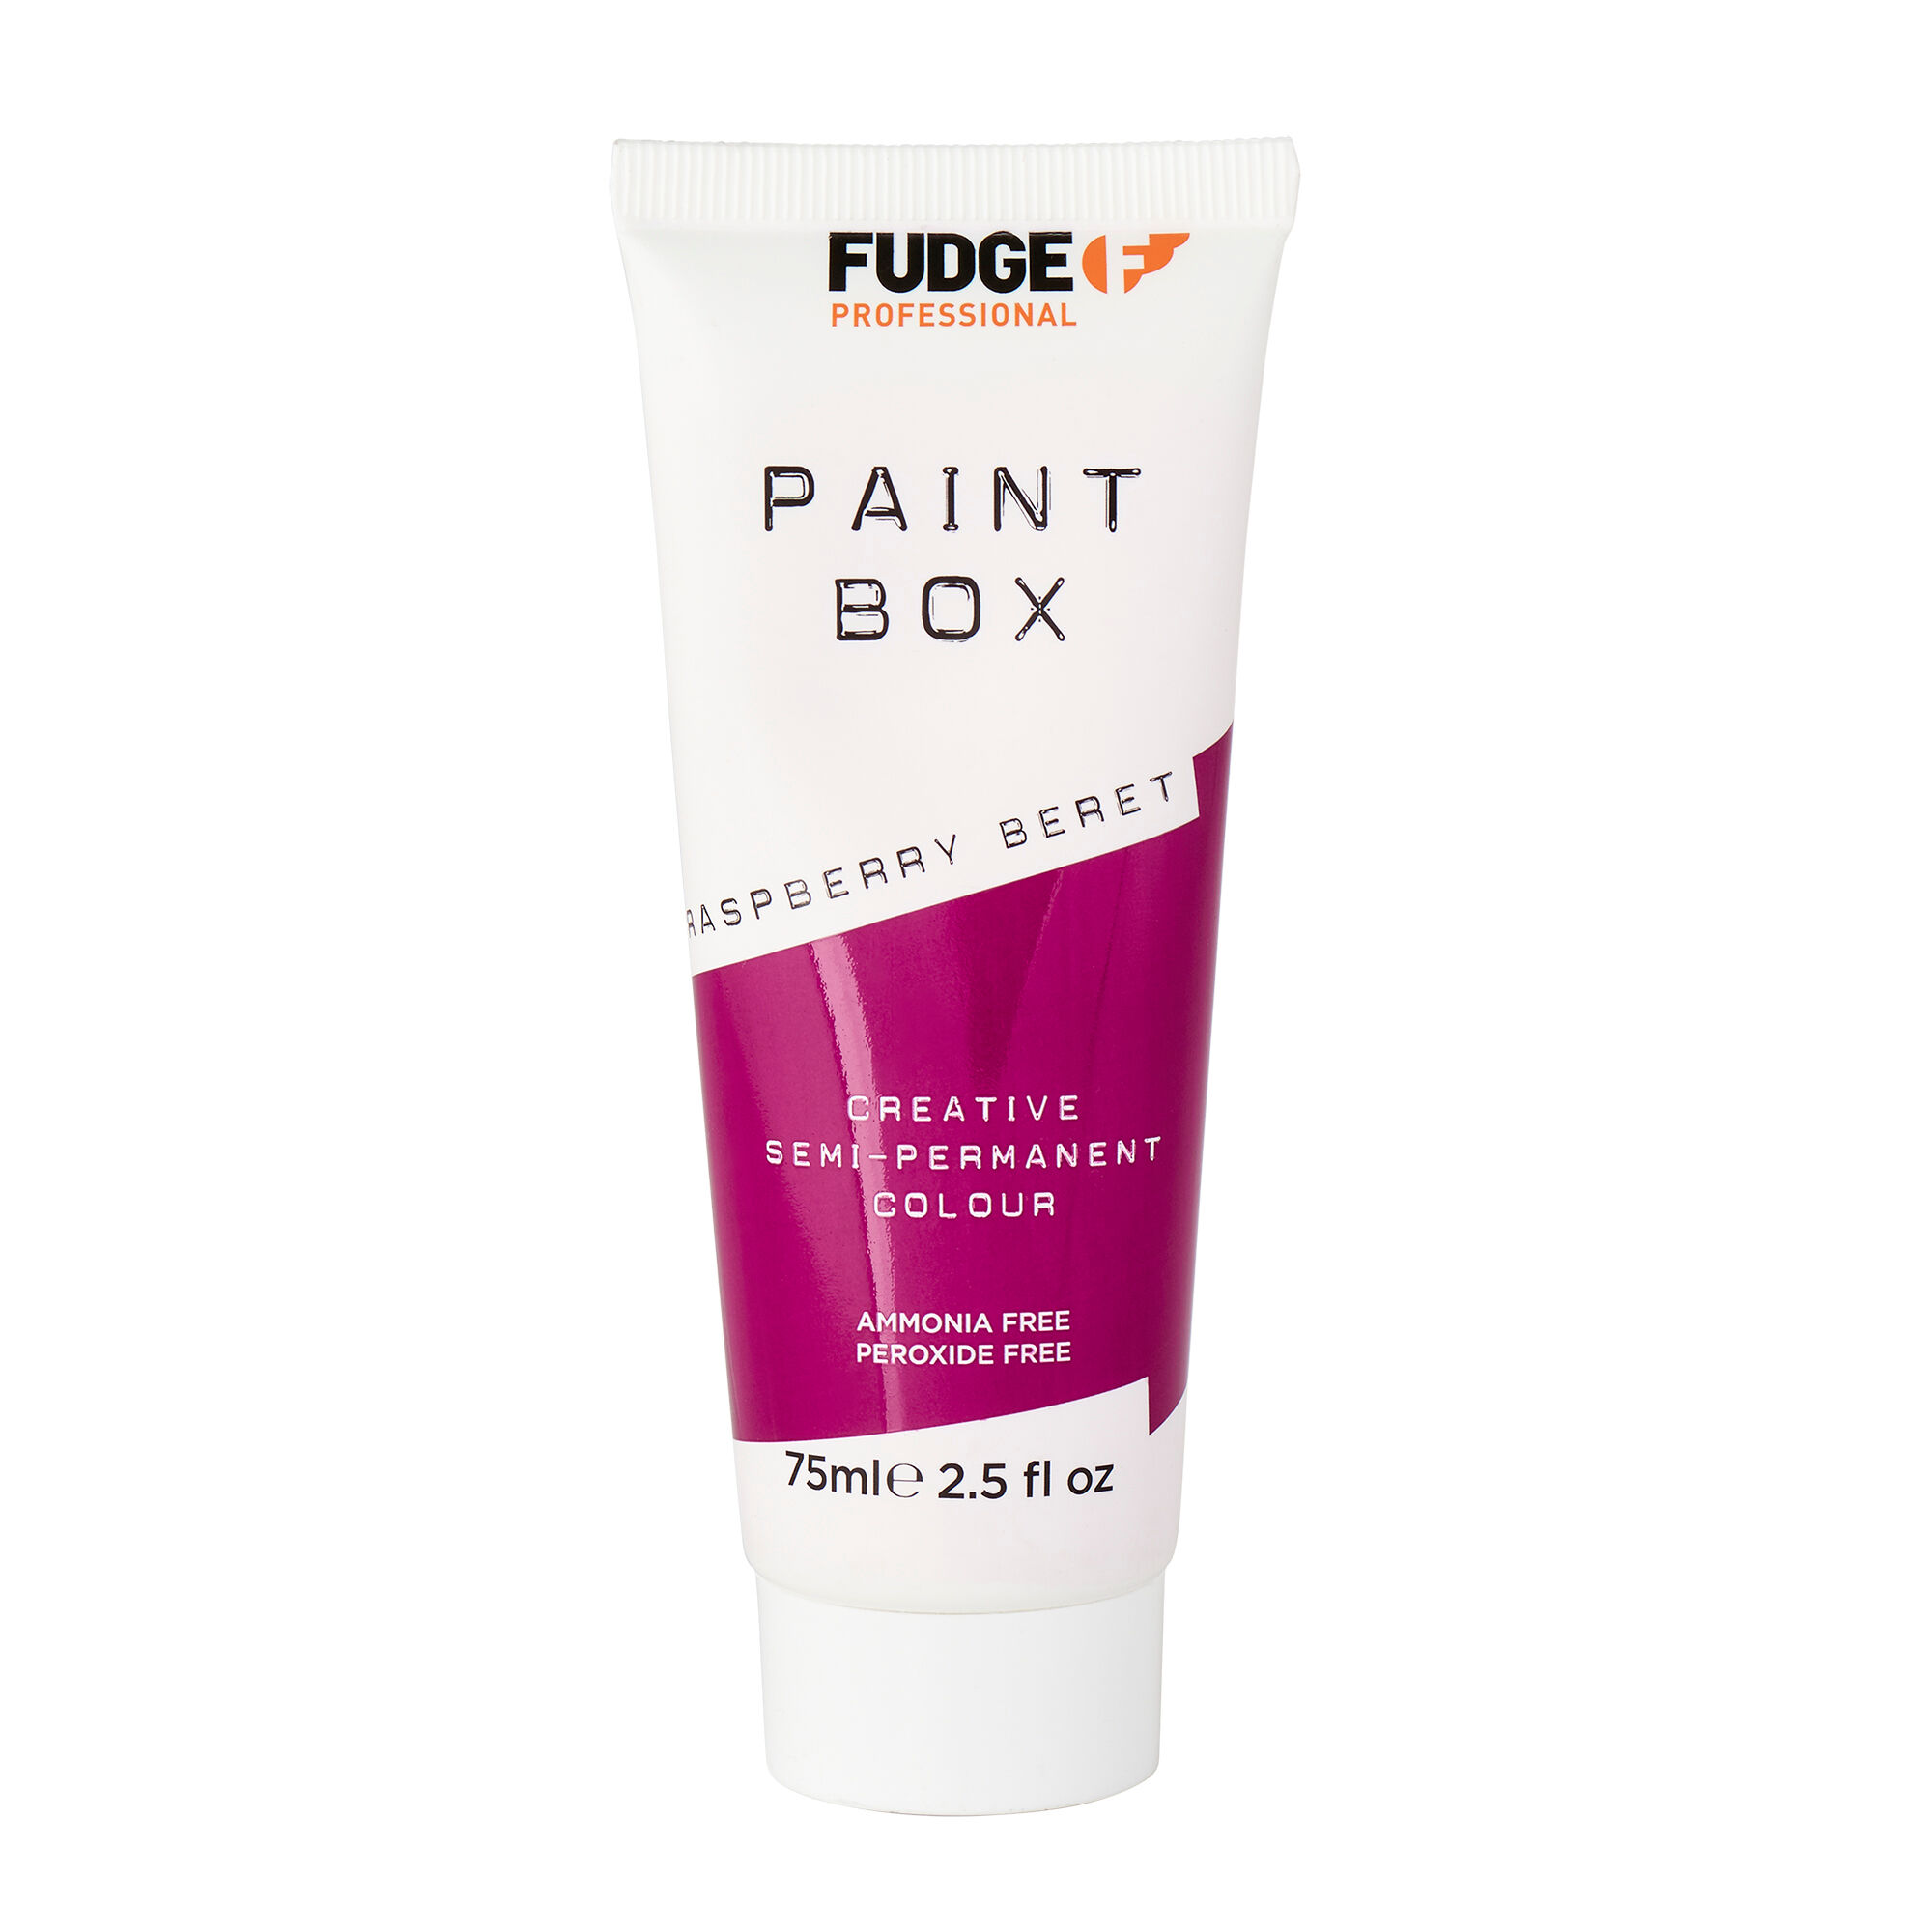 Fudge Professional Paint Box Raspberry Beret Creative Semi Permanent Colour 75ml